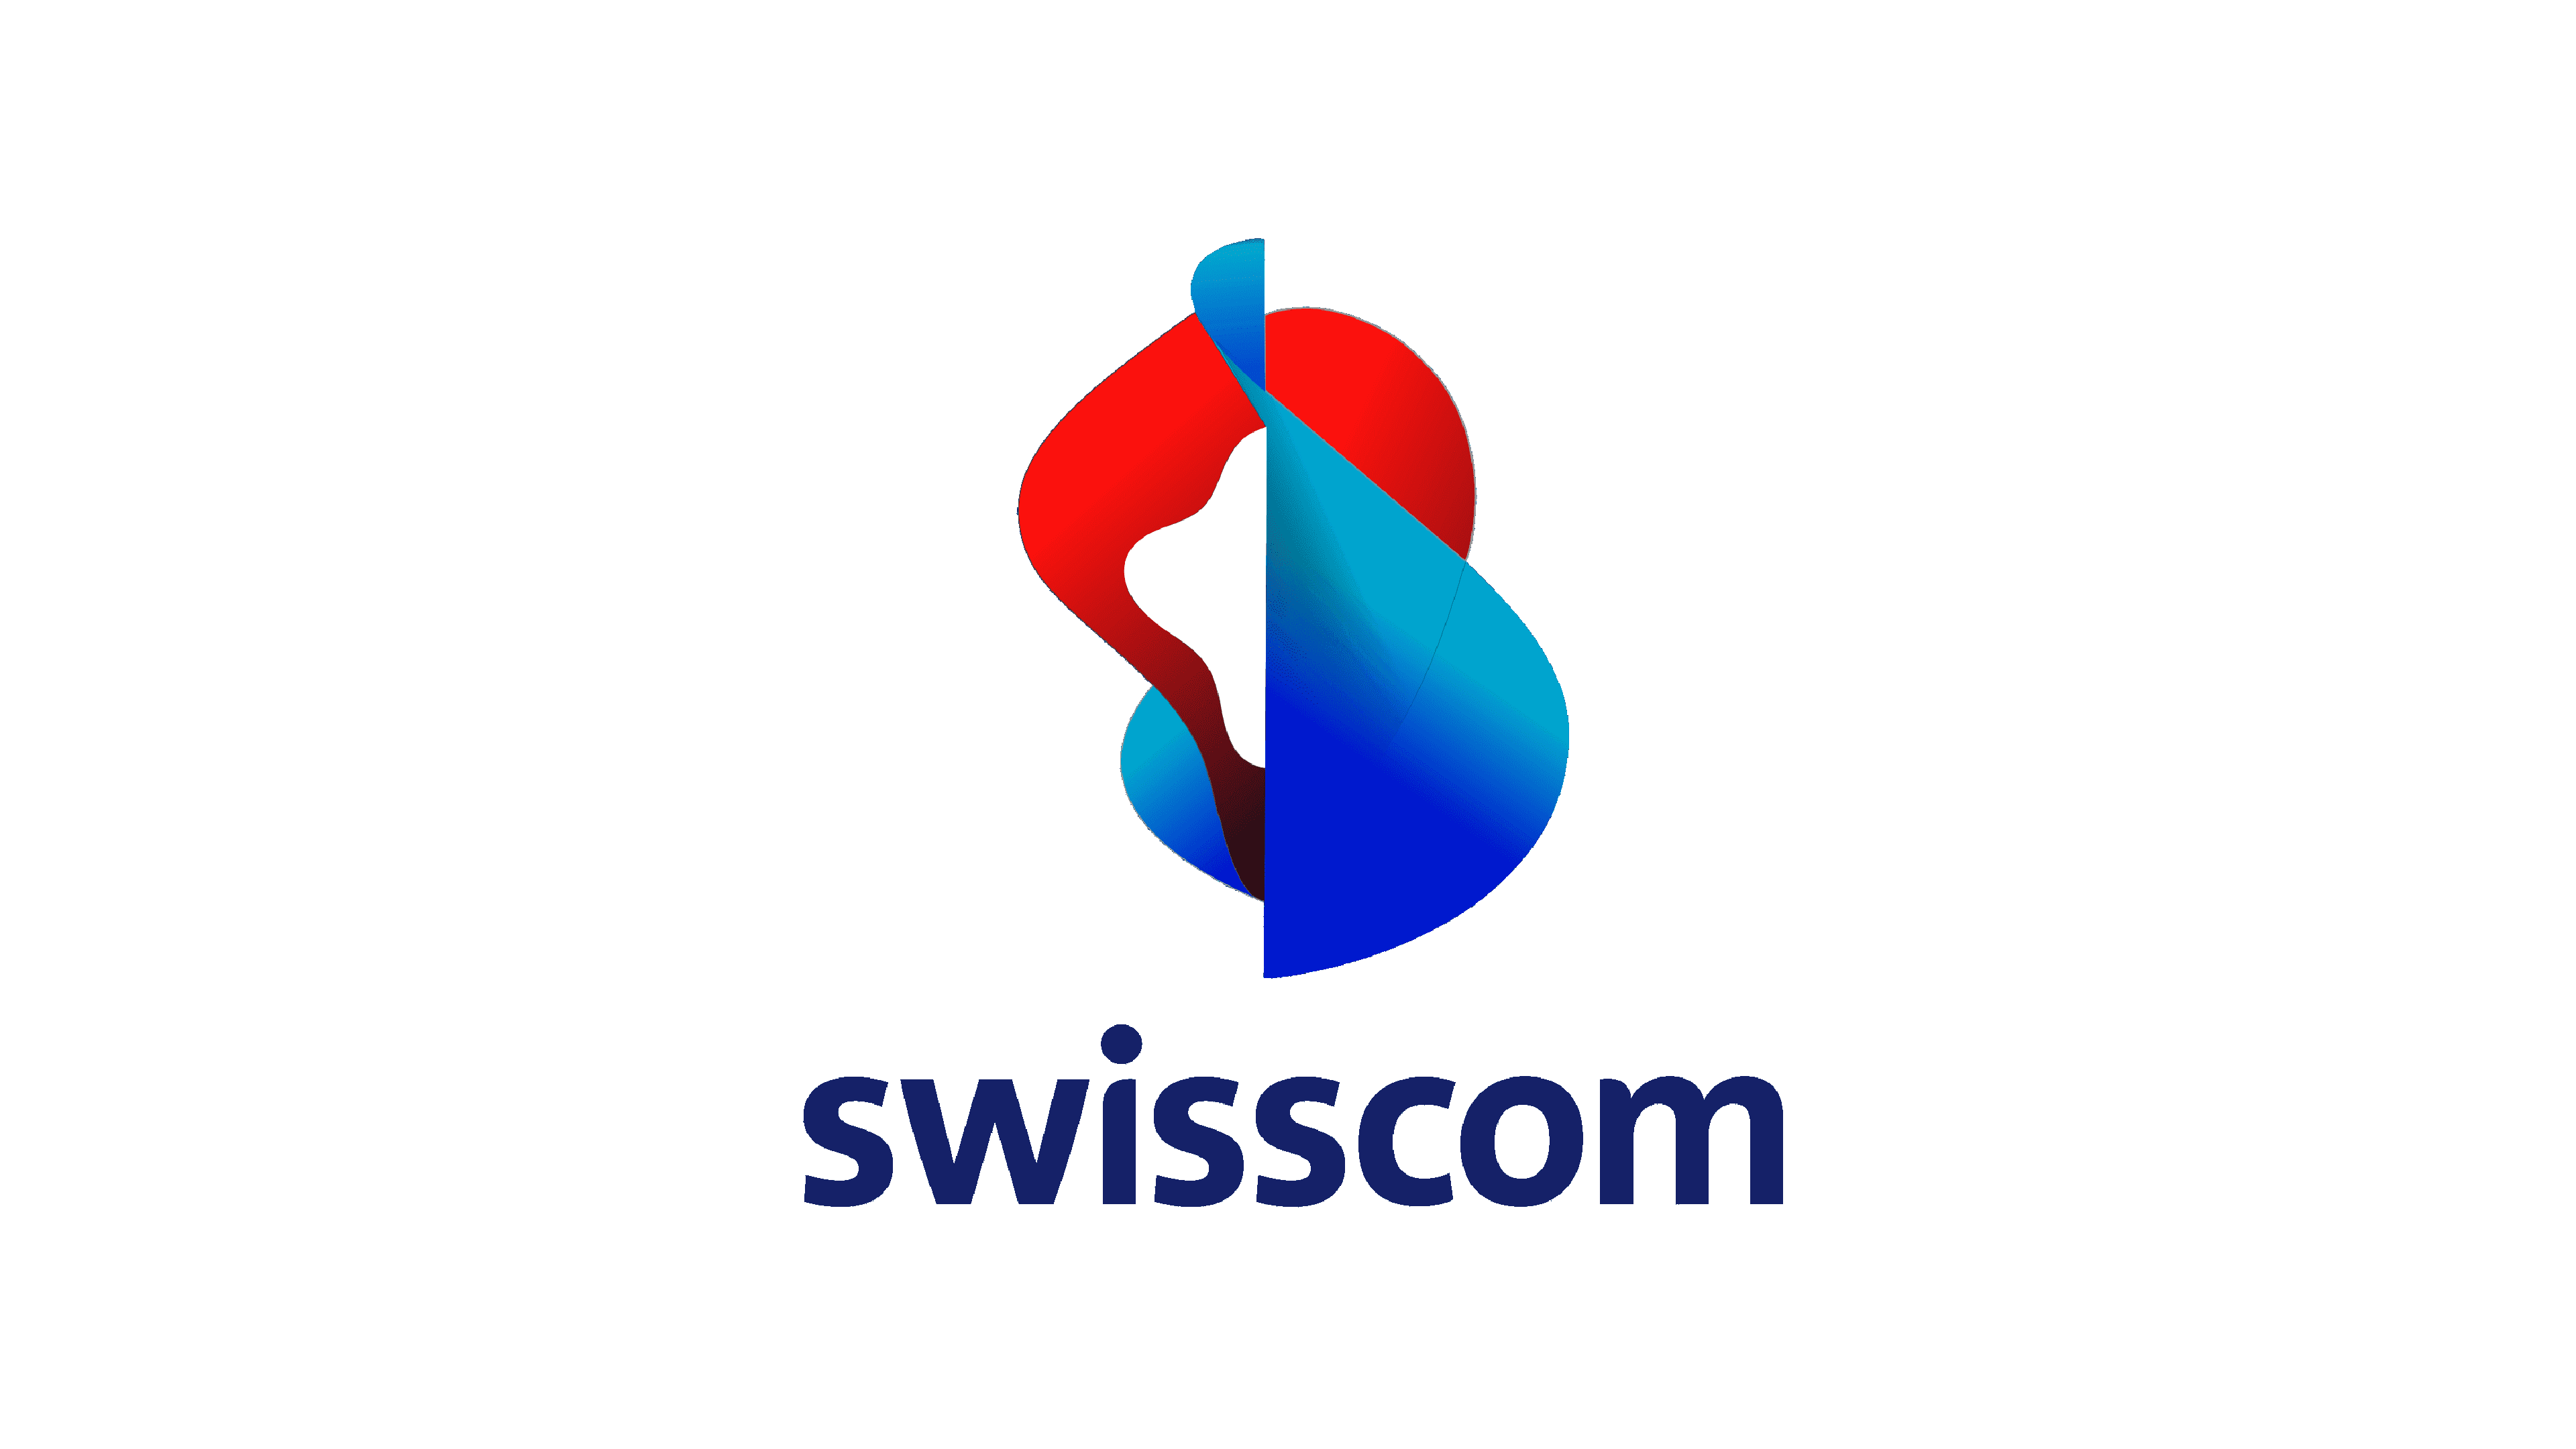 Swisscom Deploys Netcracker Network Domain Orchestration for IP Transport Automation